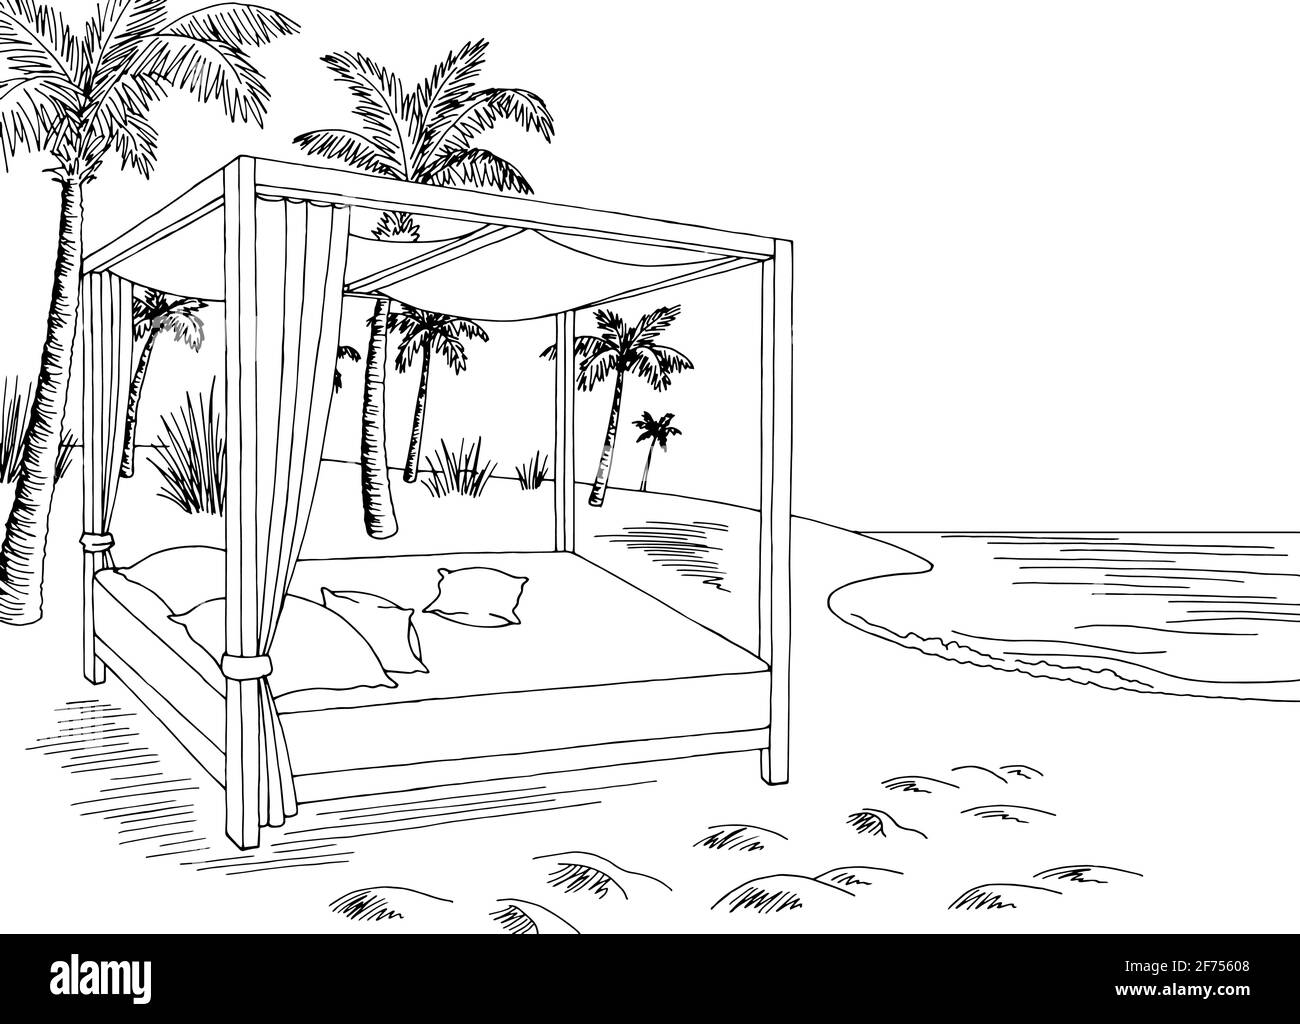 Küste Strand Bett Grafik schwarz weiß Landschaft Skizze Illustration vektor Stock Vektor